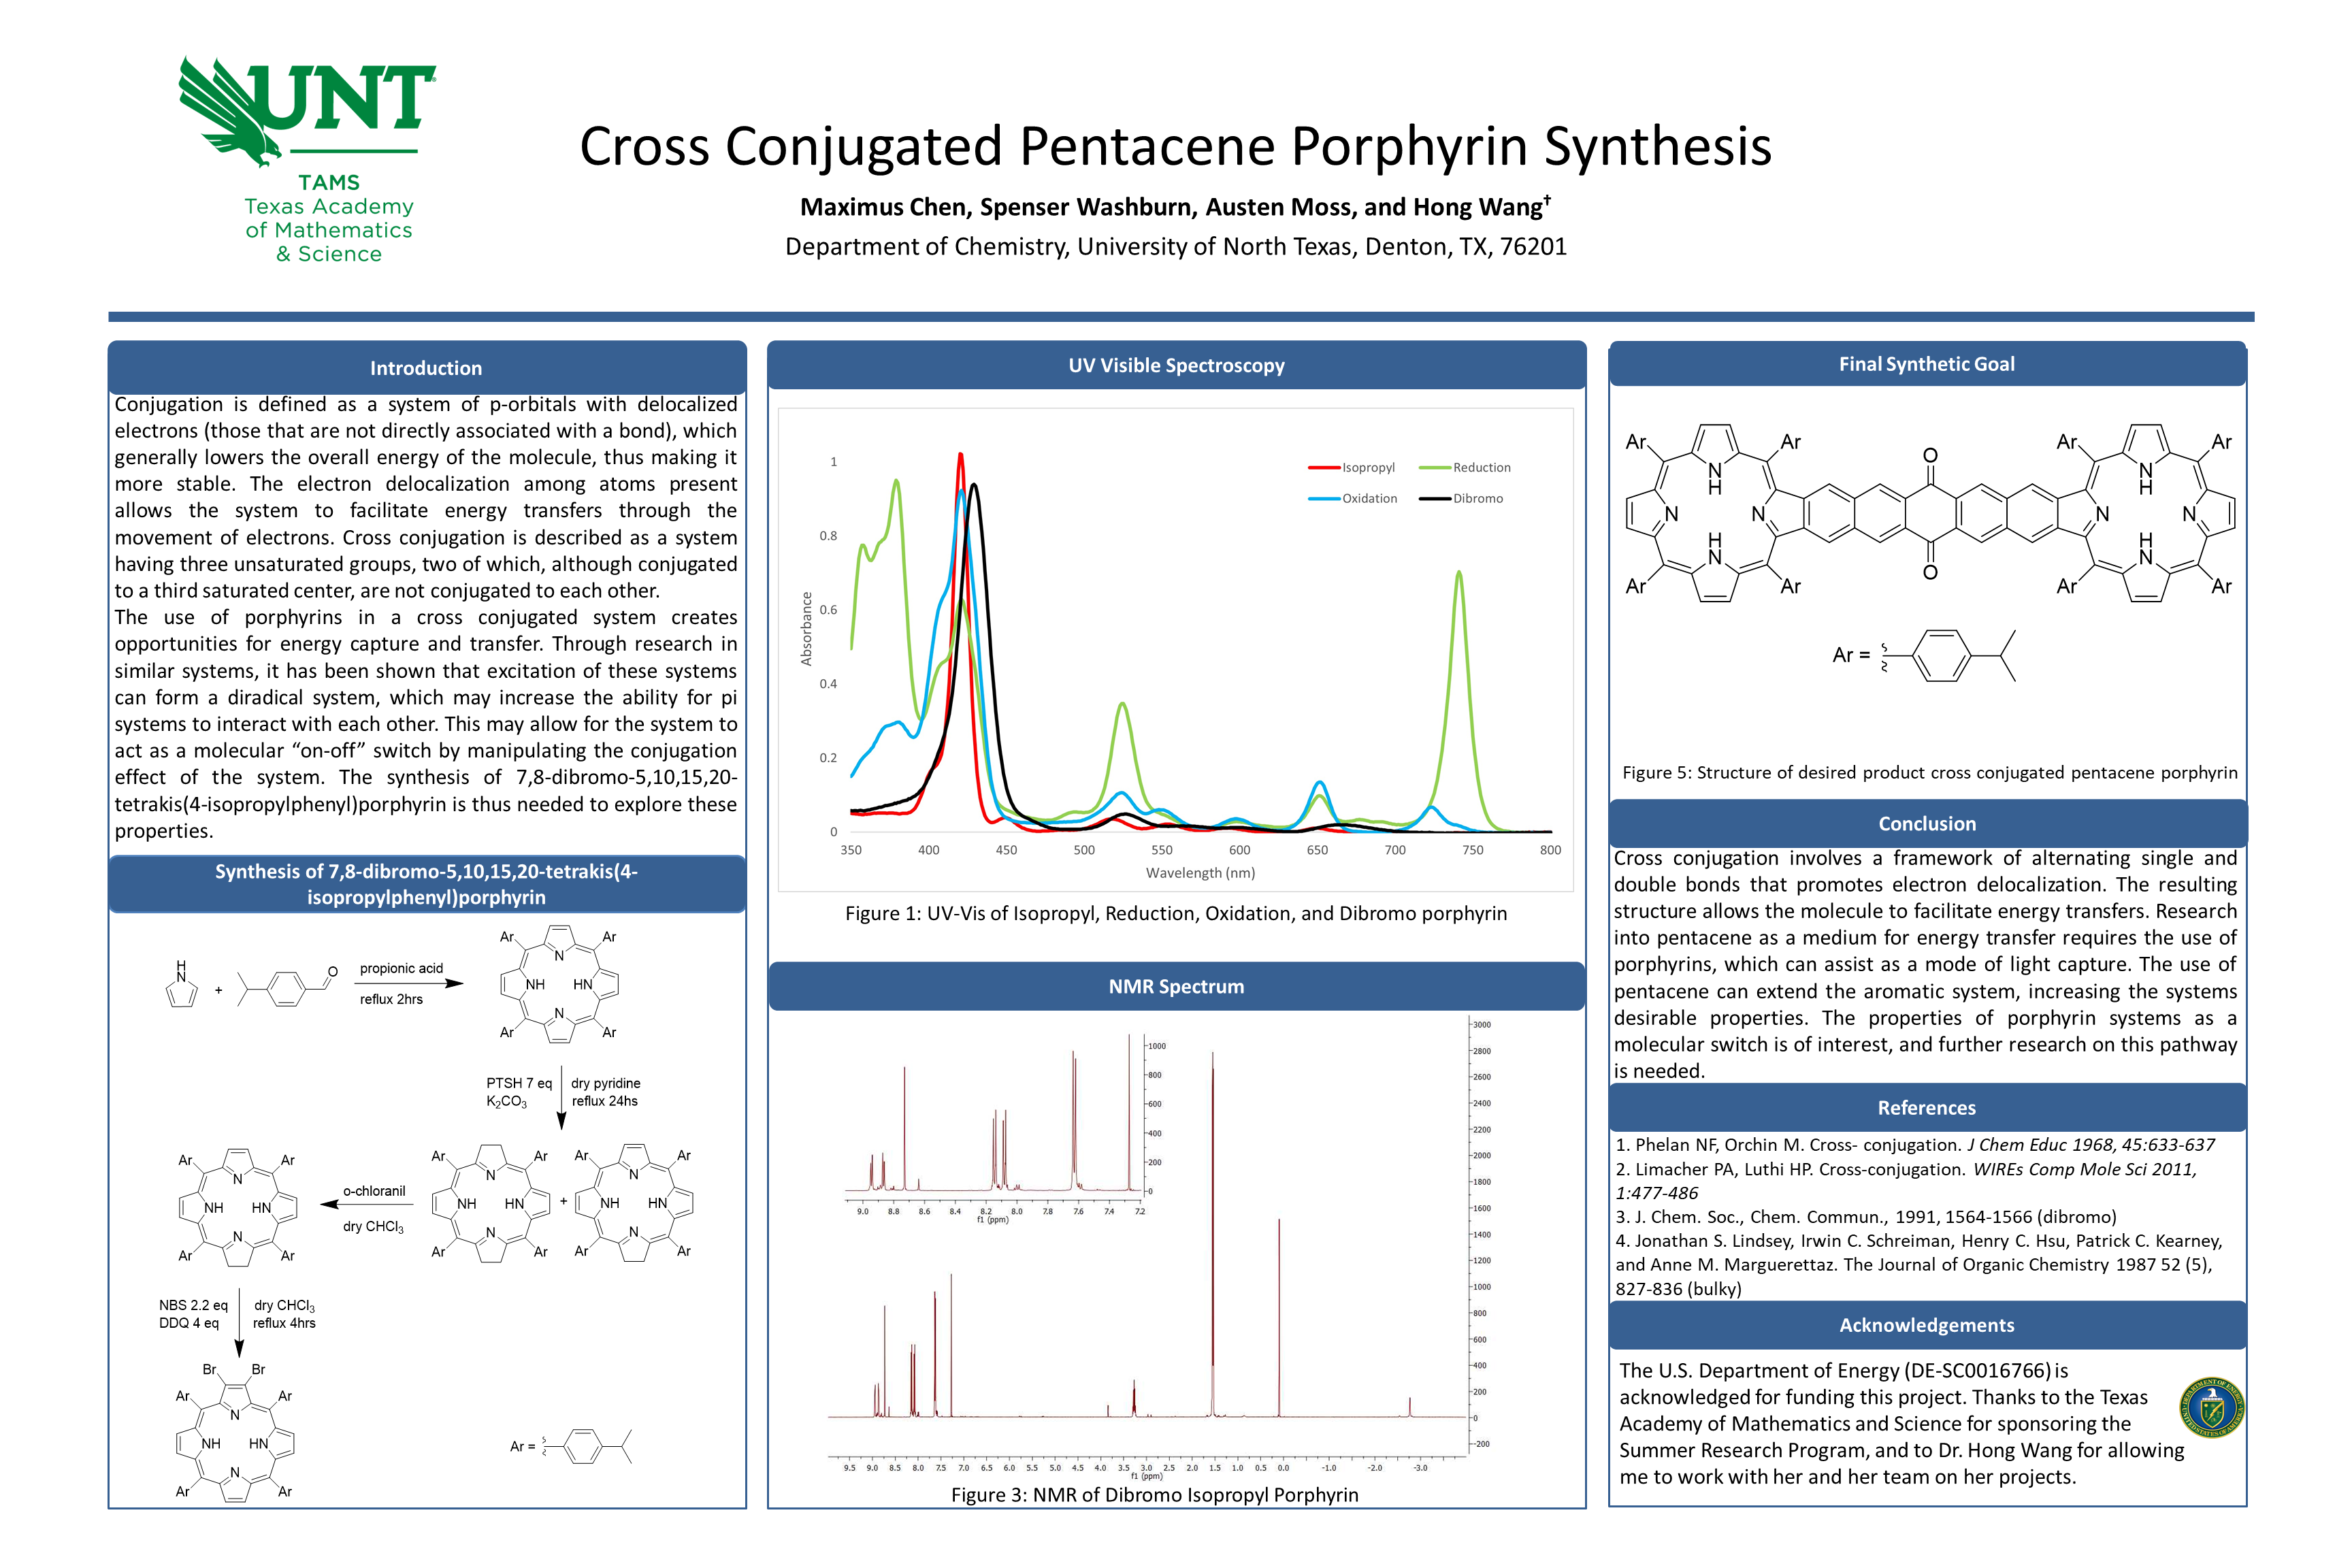 Cross-Conjugated Pentacene Porphyrin Synthesis